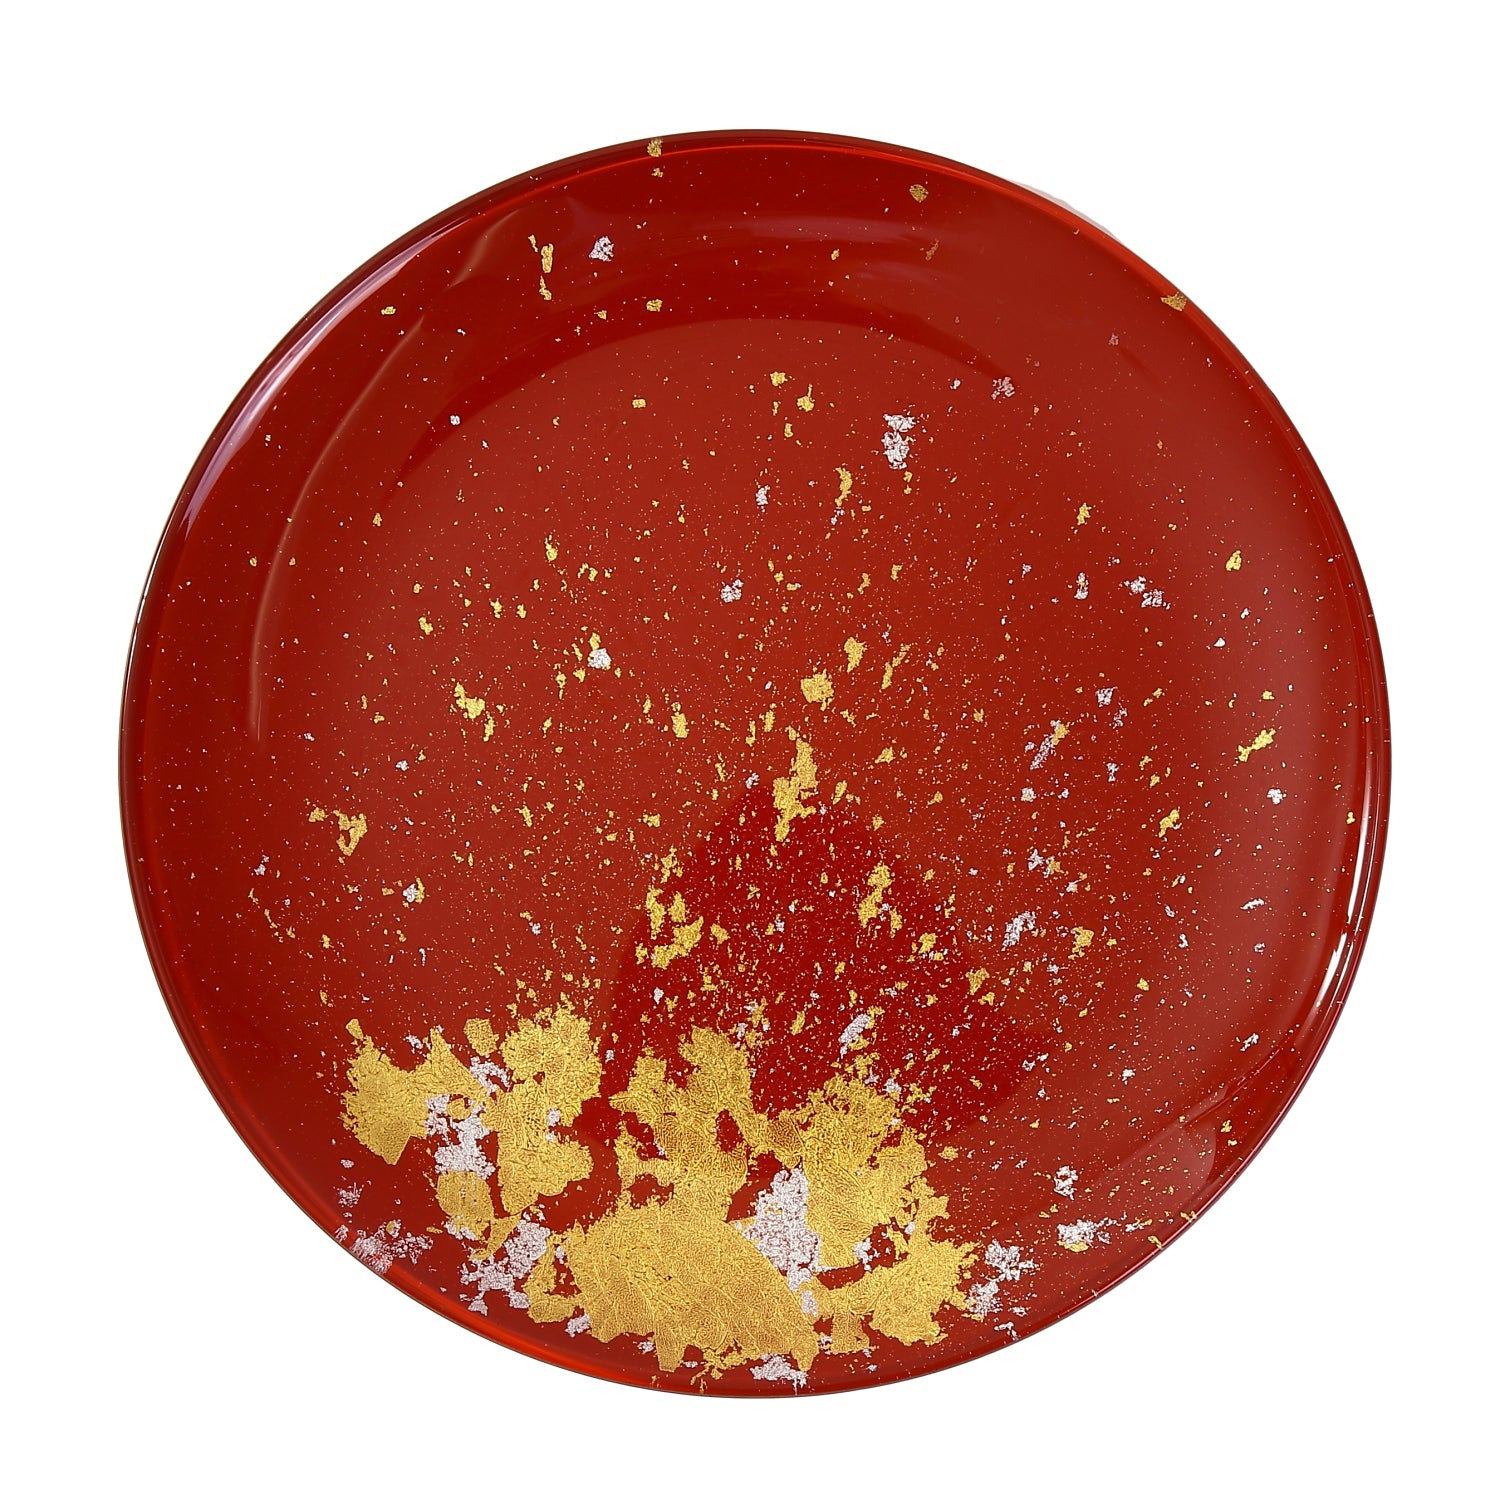 Syosaku Japanese Urushi Glass Flat Dinner Plate 11-inch (28cm) Vermilion with Gold Leaf, Dishwasher Safe